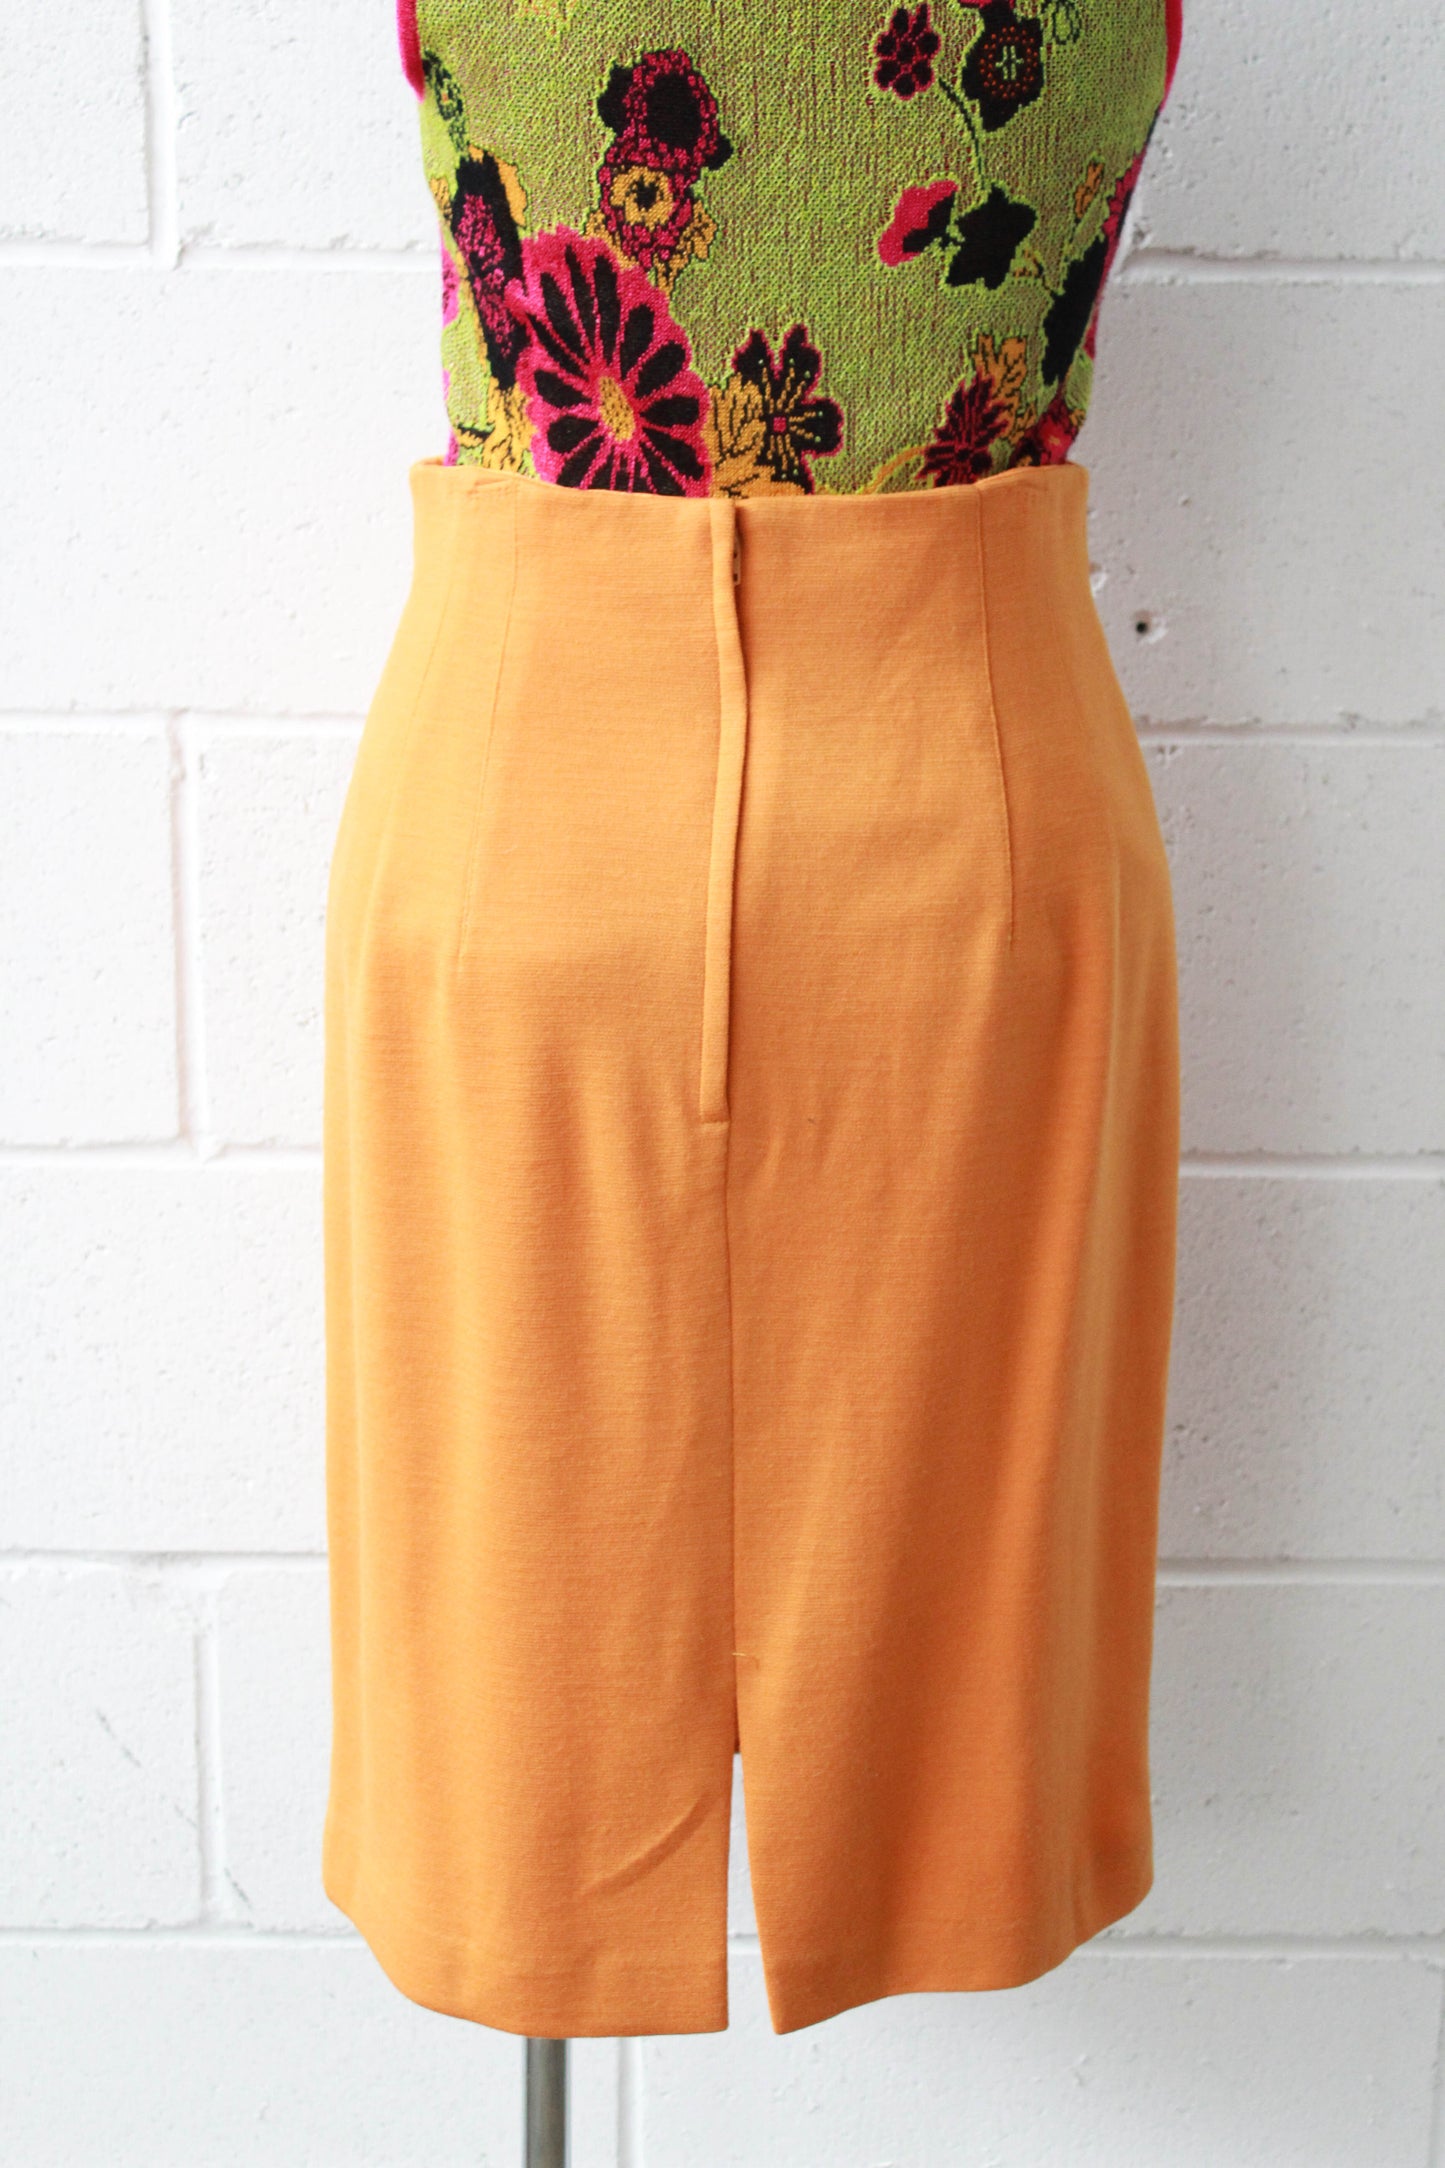 Orange/Mustard Yellow Wool Pencil Skirt, Waist 27"